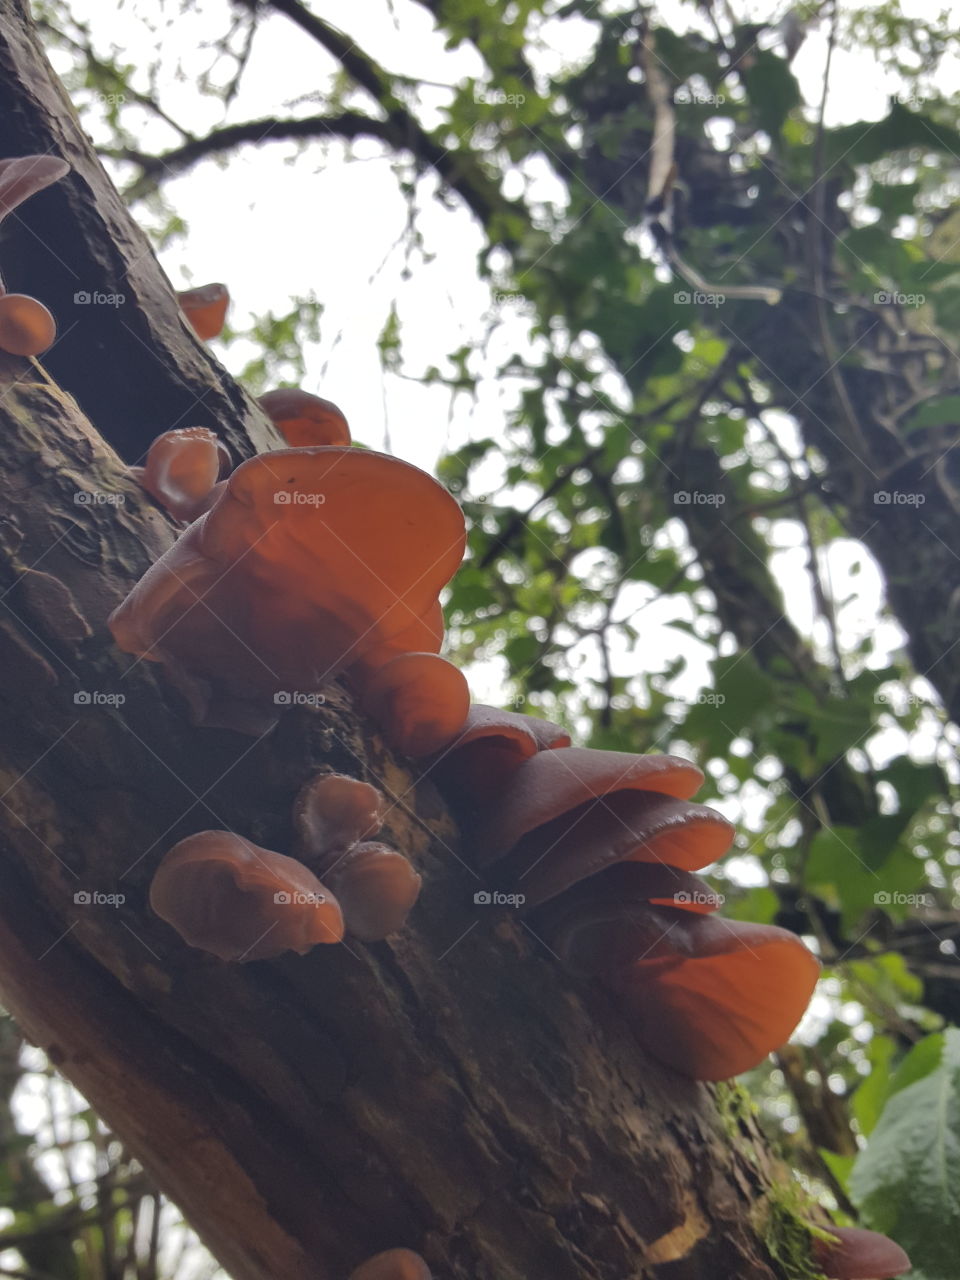 fungi ears of the tree